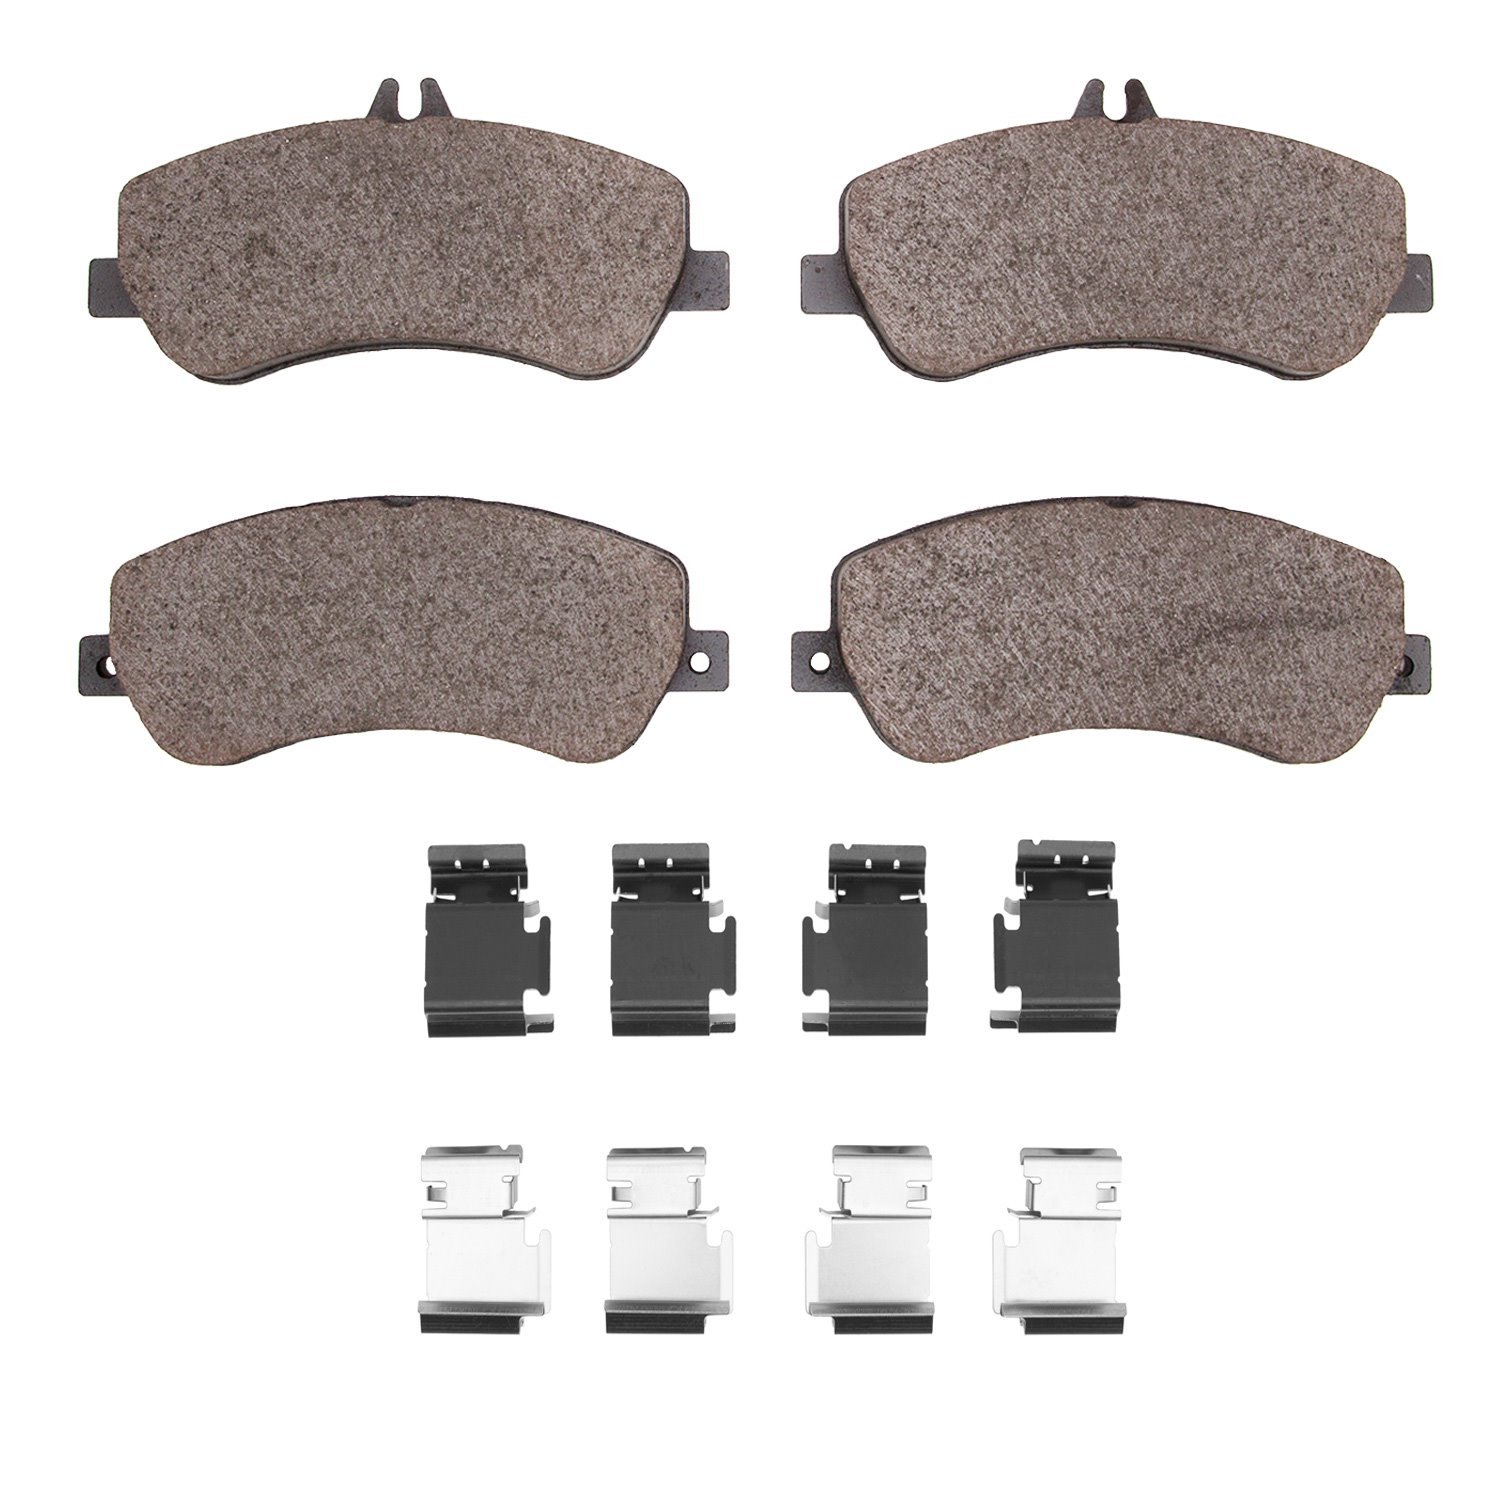 1552-1406-01 5000 Advanced Low-Metallic Brake Pads & Hardware Kit, 2009-2015 Mercedes-Benz, Position: Front